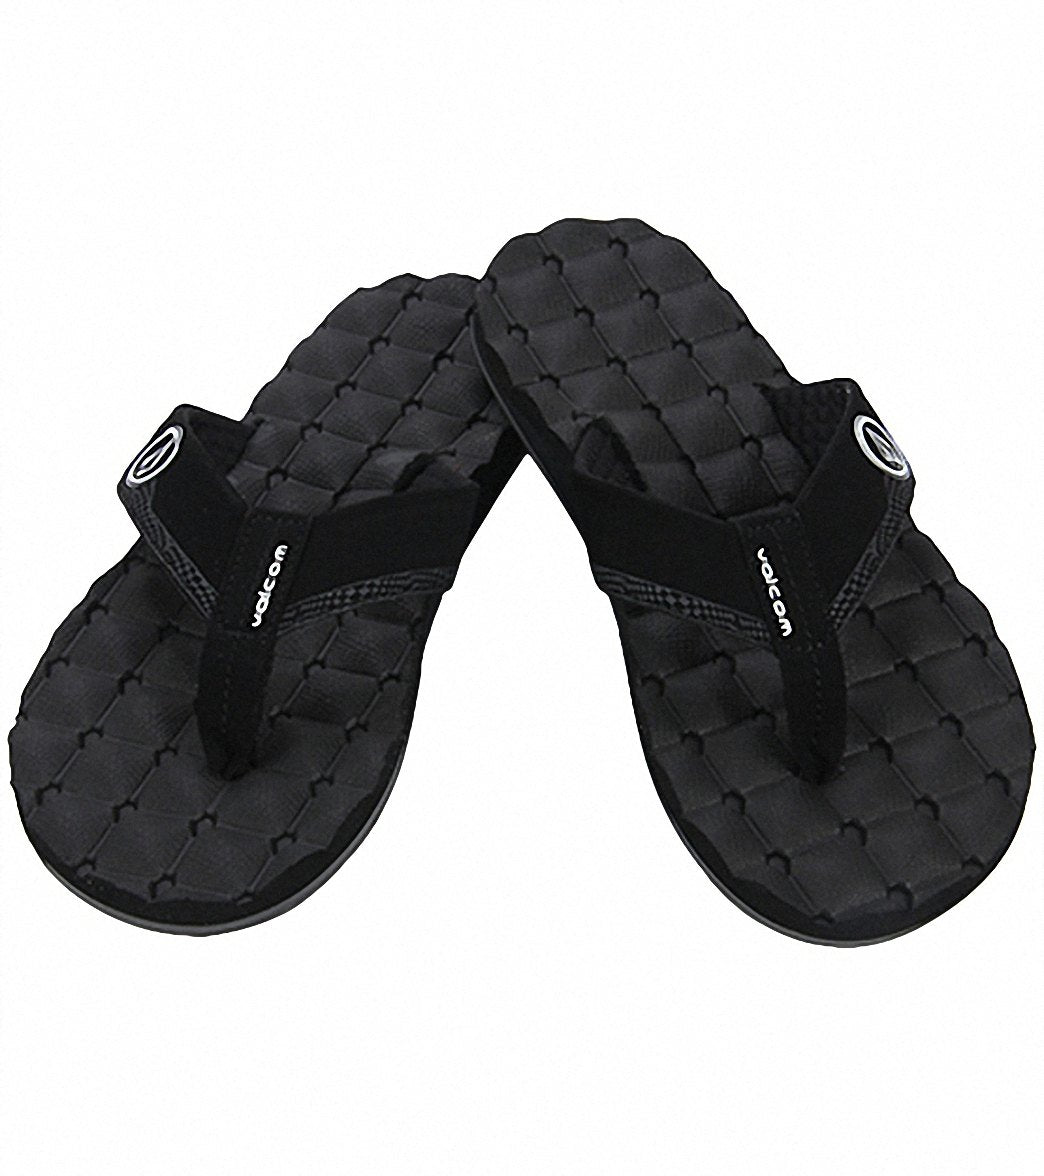 Volcom Men's Recliner Sandals - Black/White 8 - Swimoutlet.com